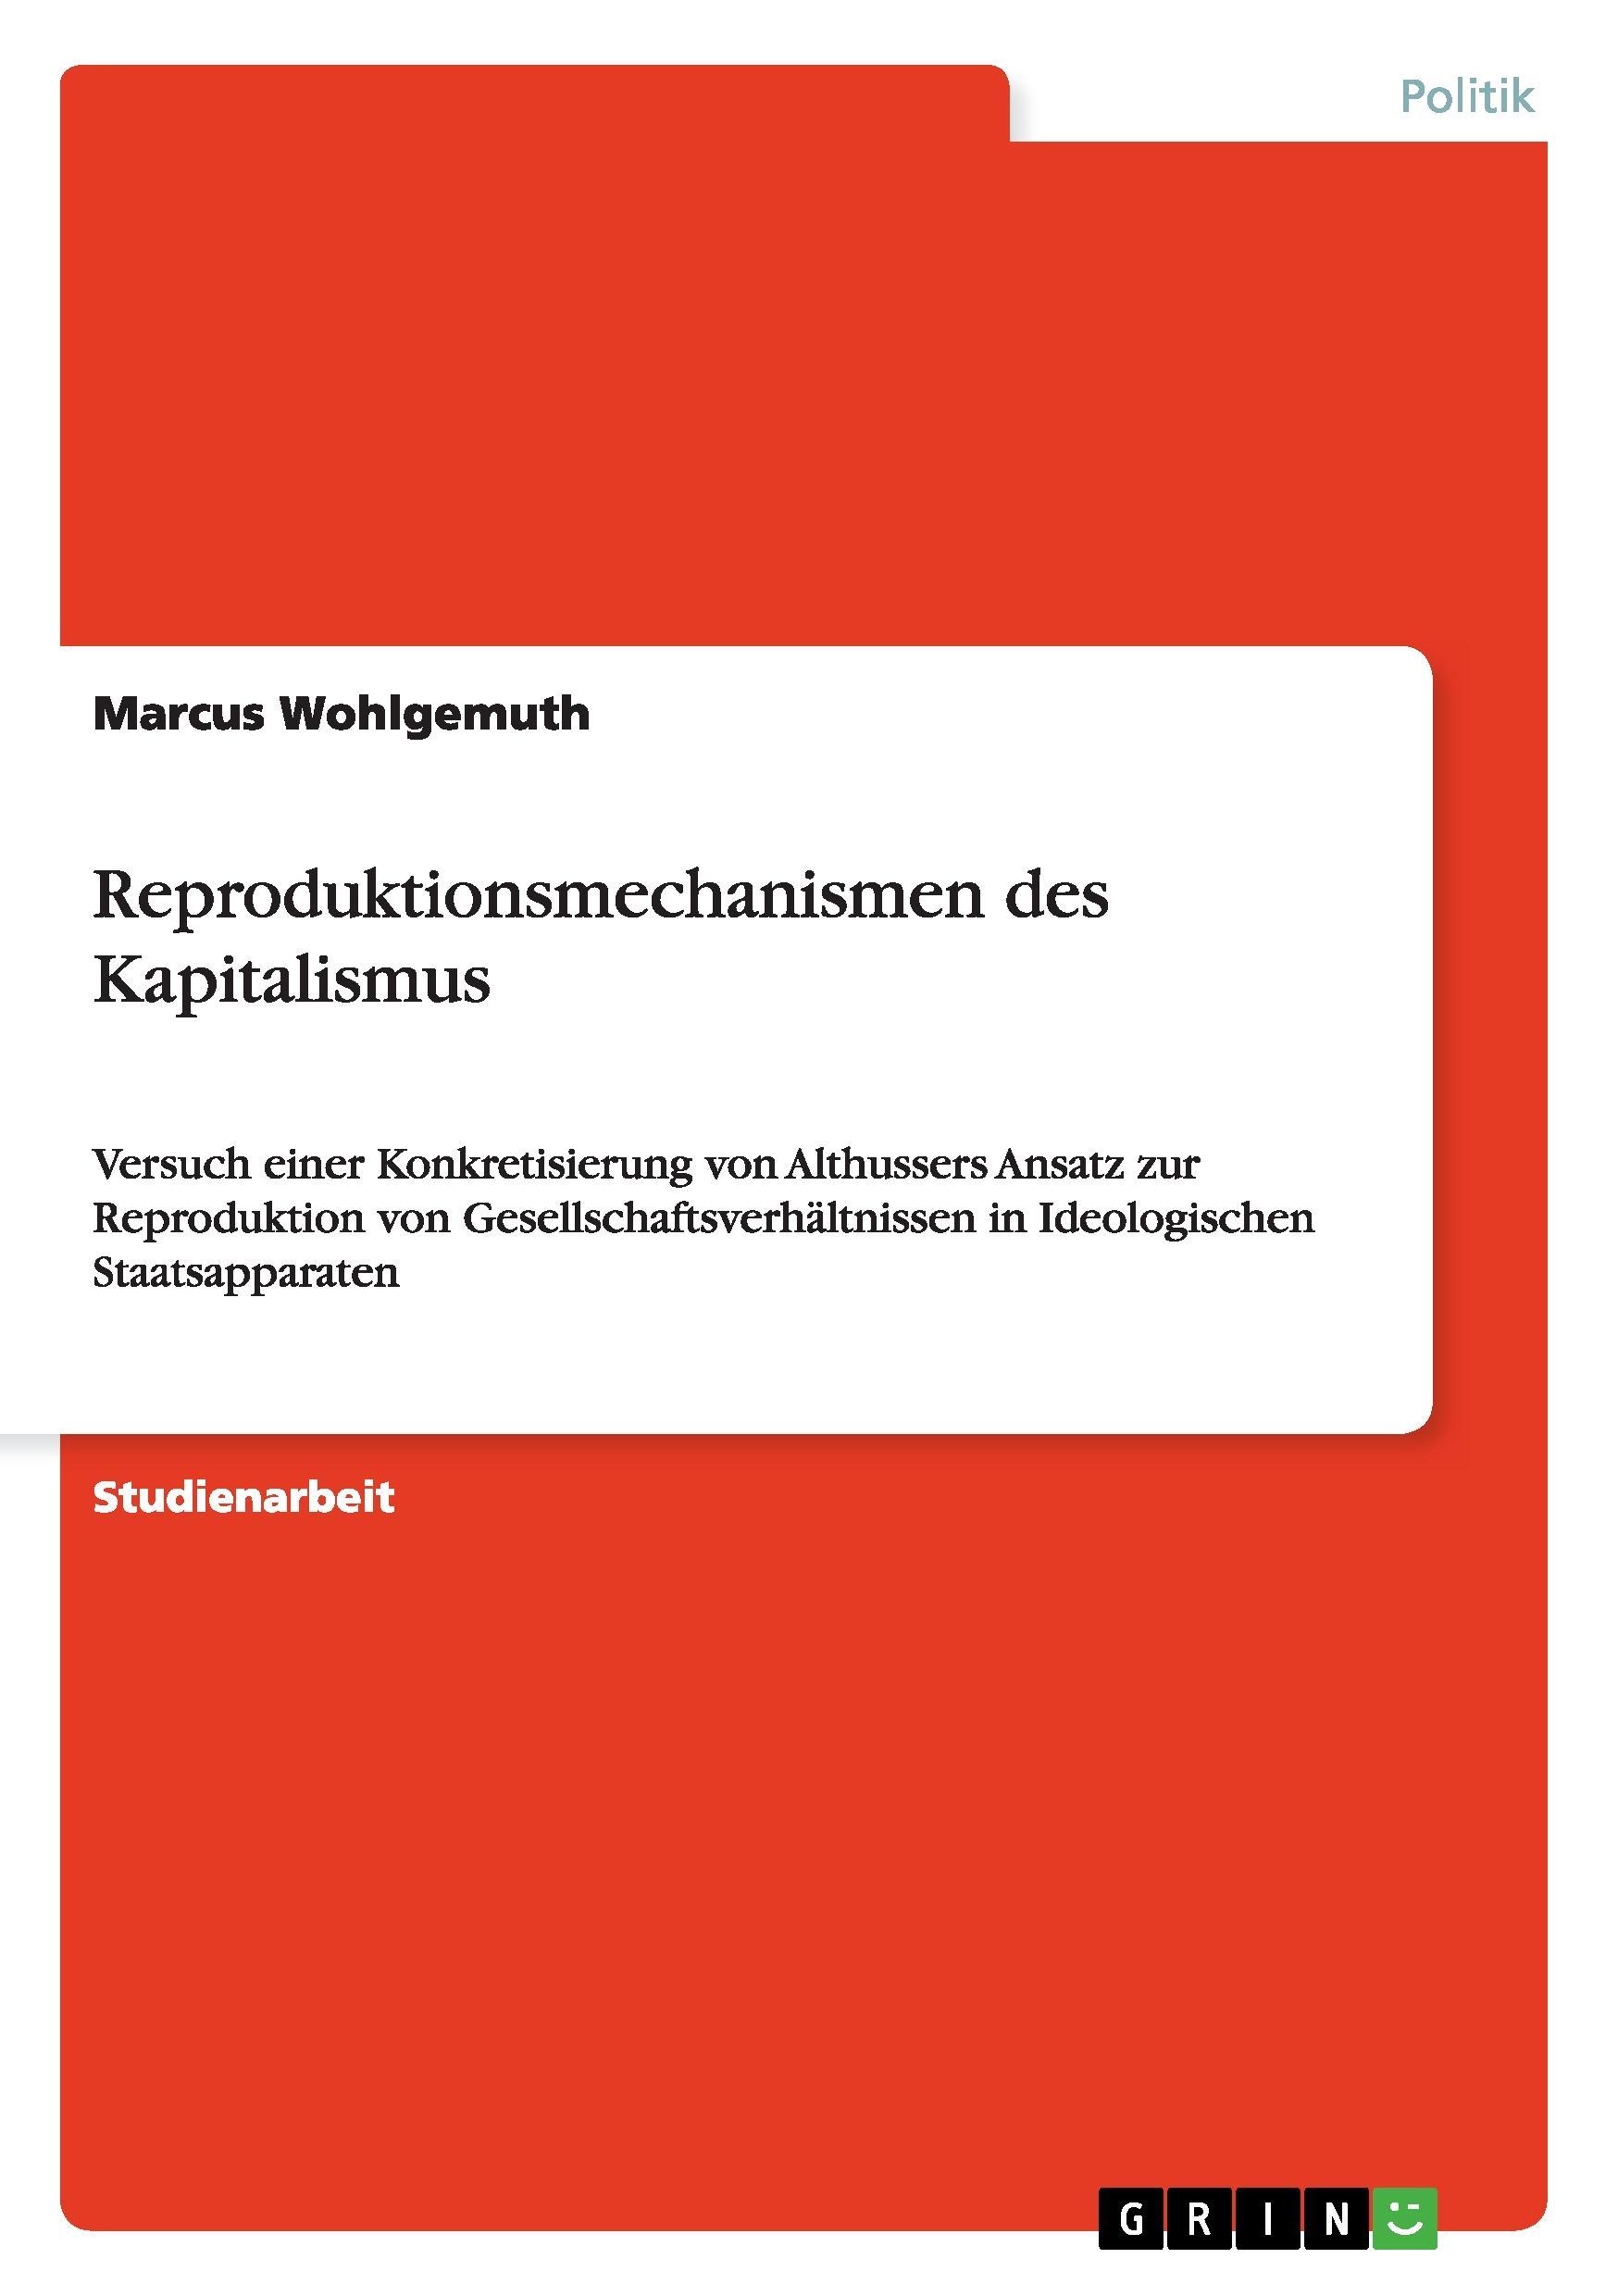 Reproduktionsmechanismen des Kapitalismus - Wohlgemuth, Marcus